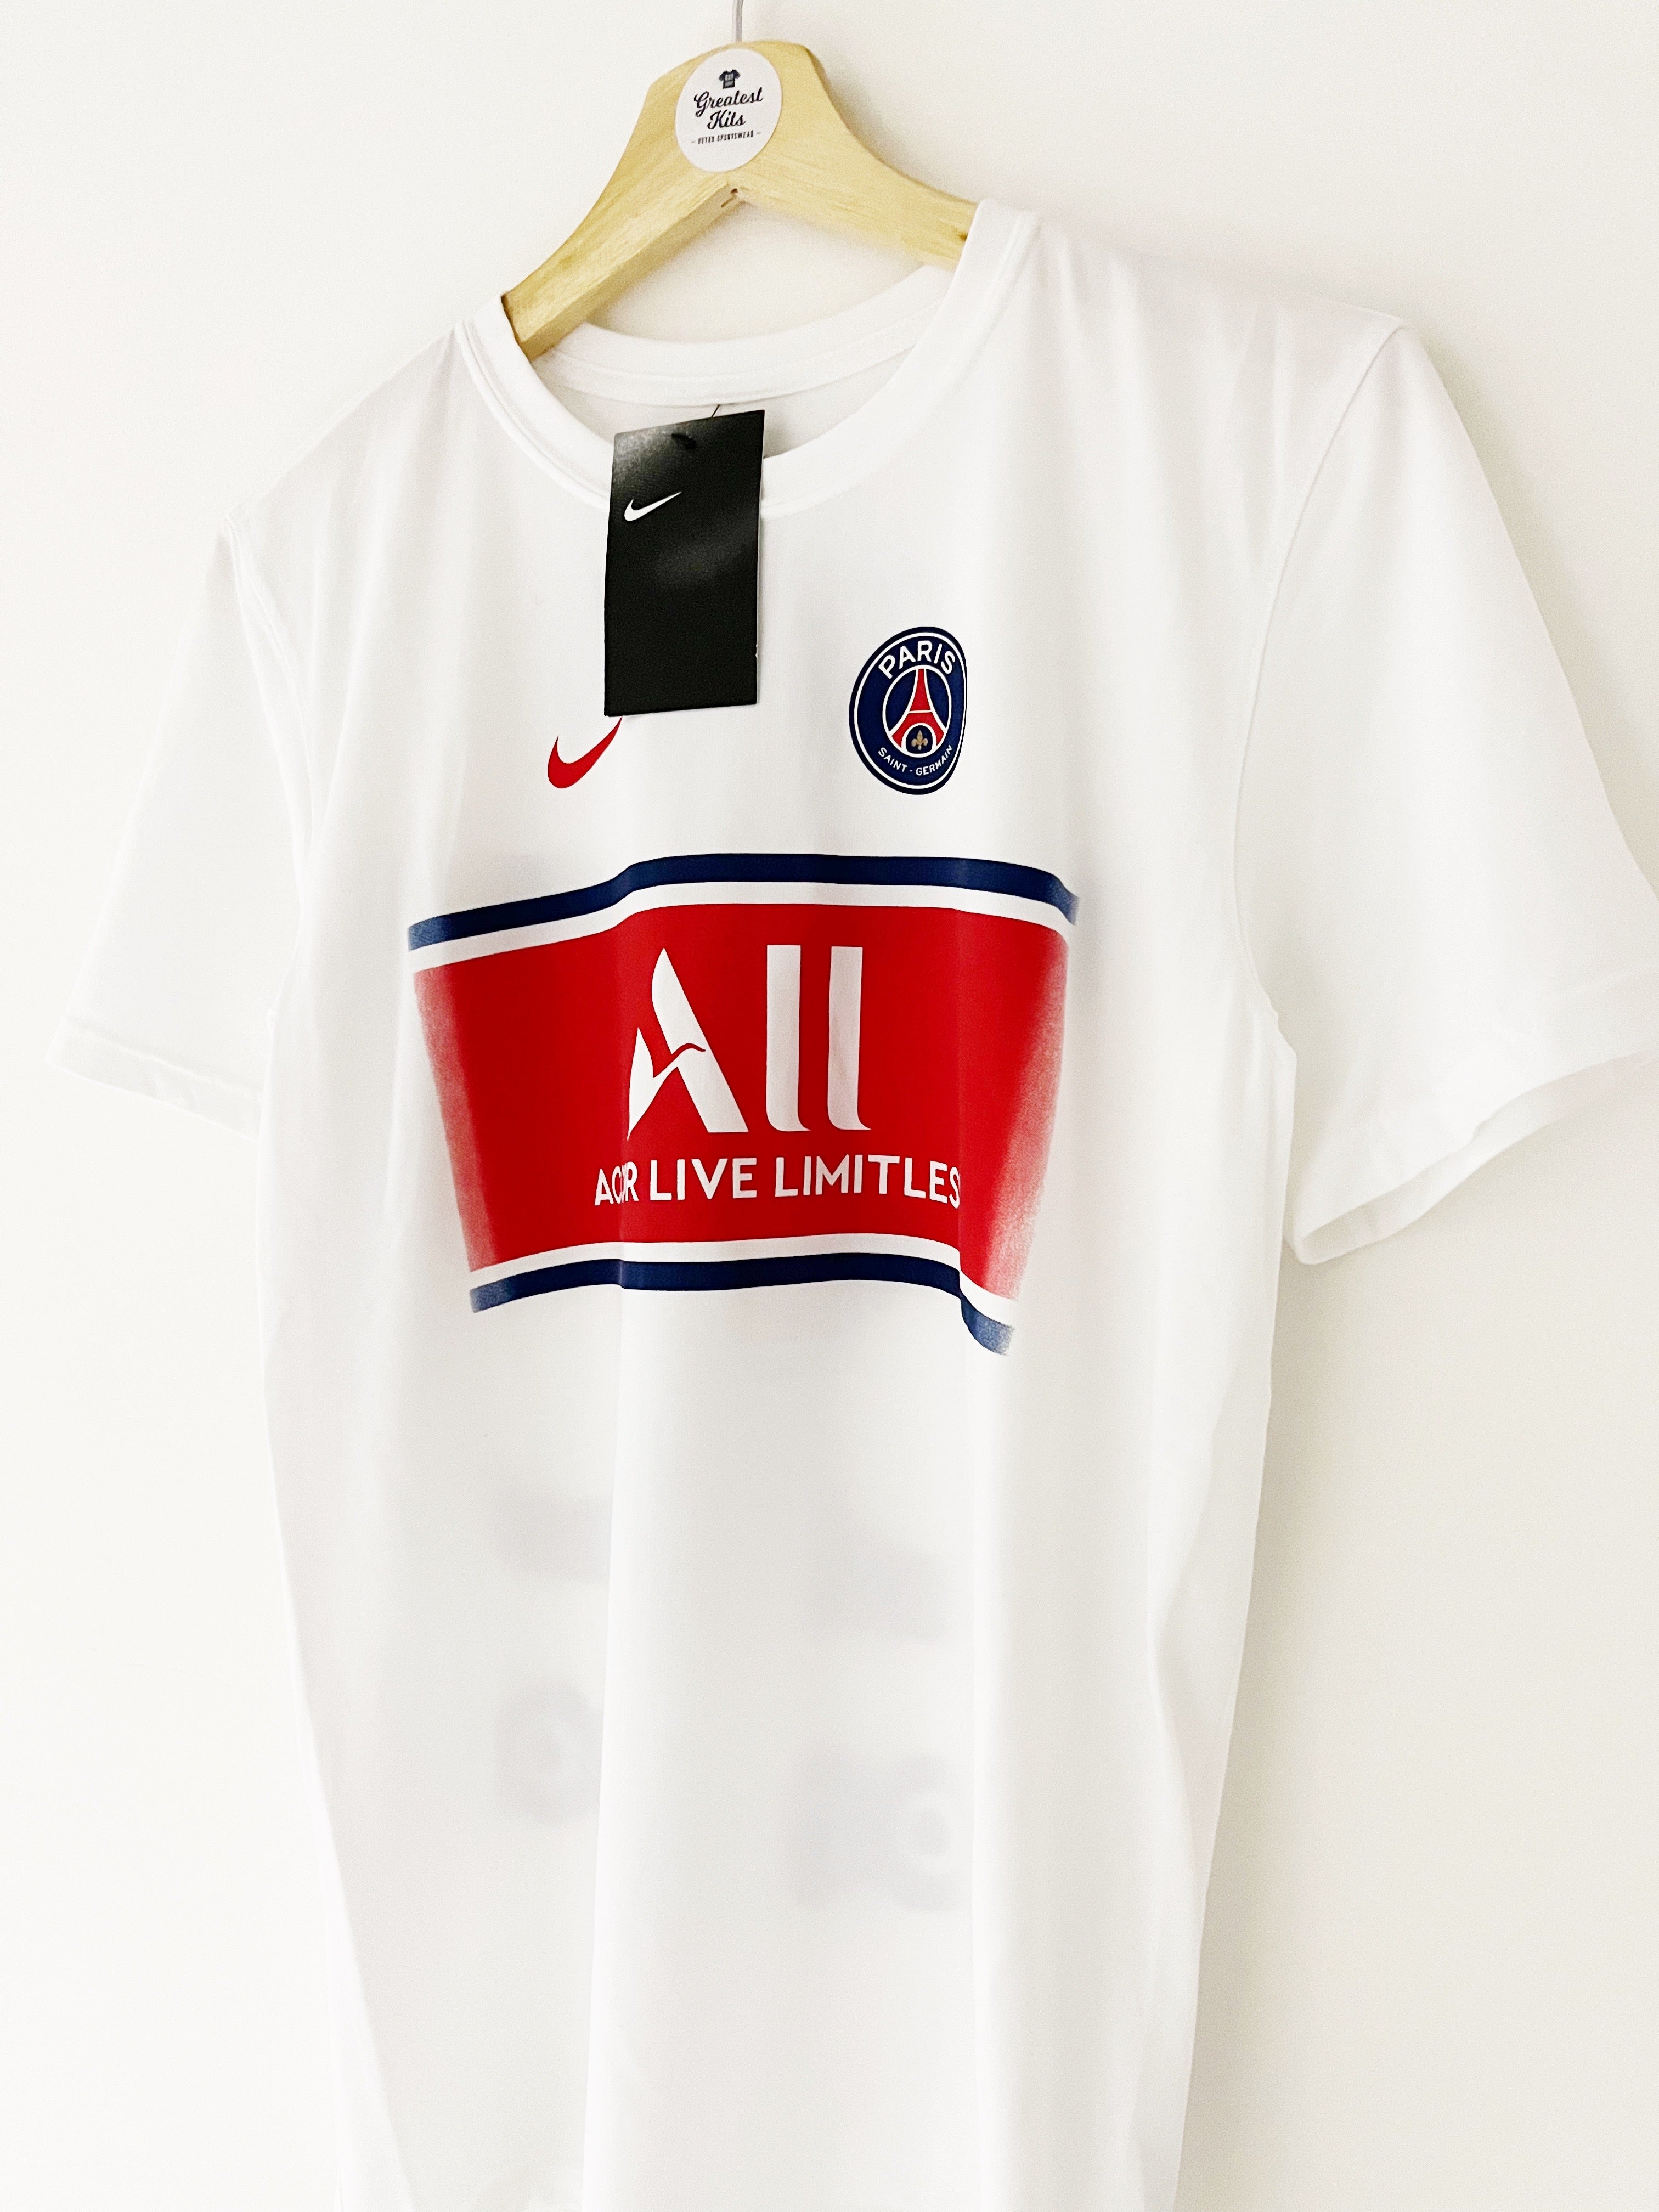 2020/21 Paris Saint-Germain Fan T-Shirt Messi #30 (S) BNWT